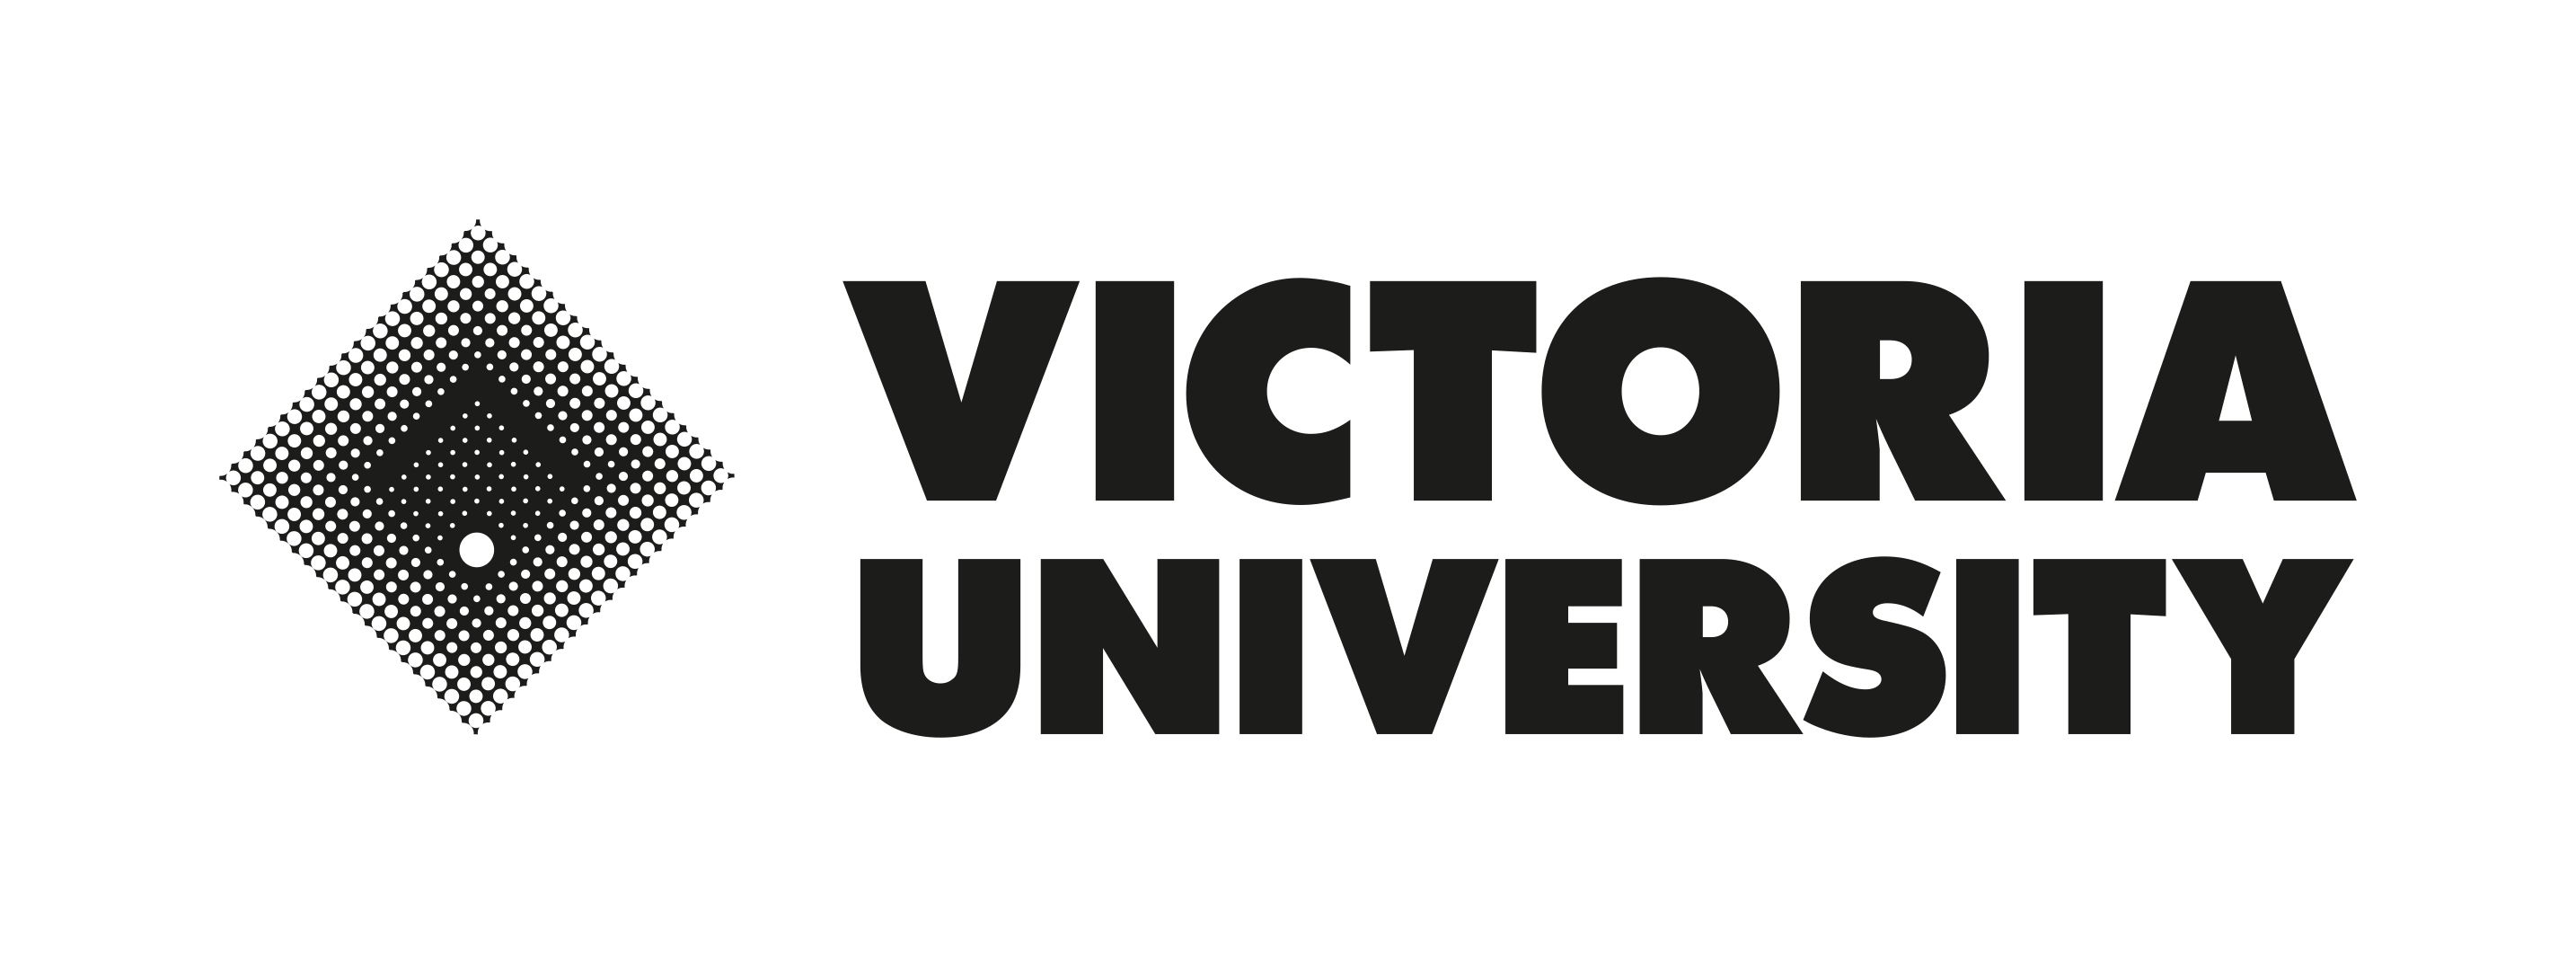 Victoria University Logo Master K